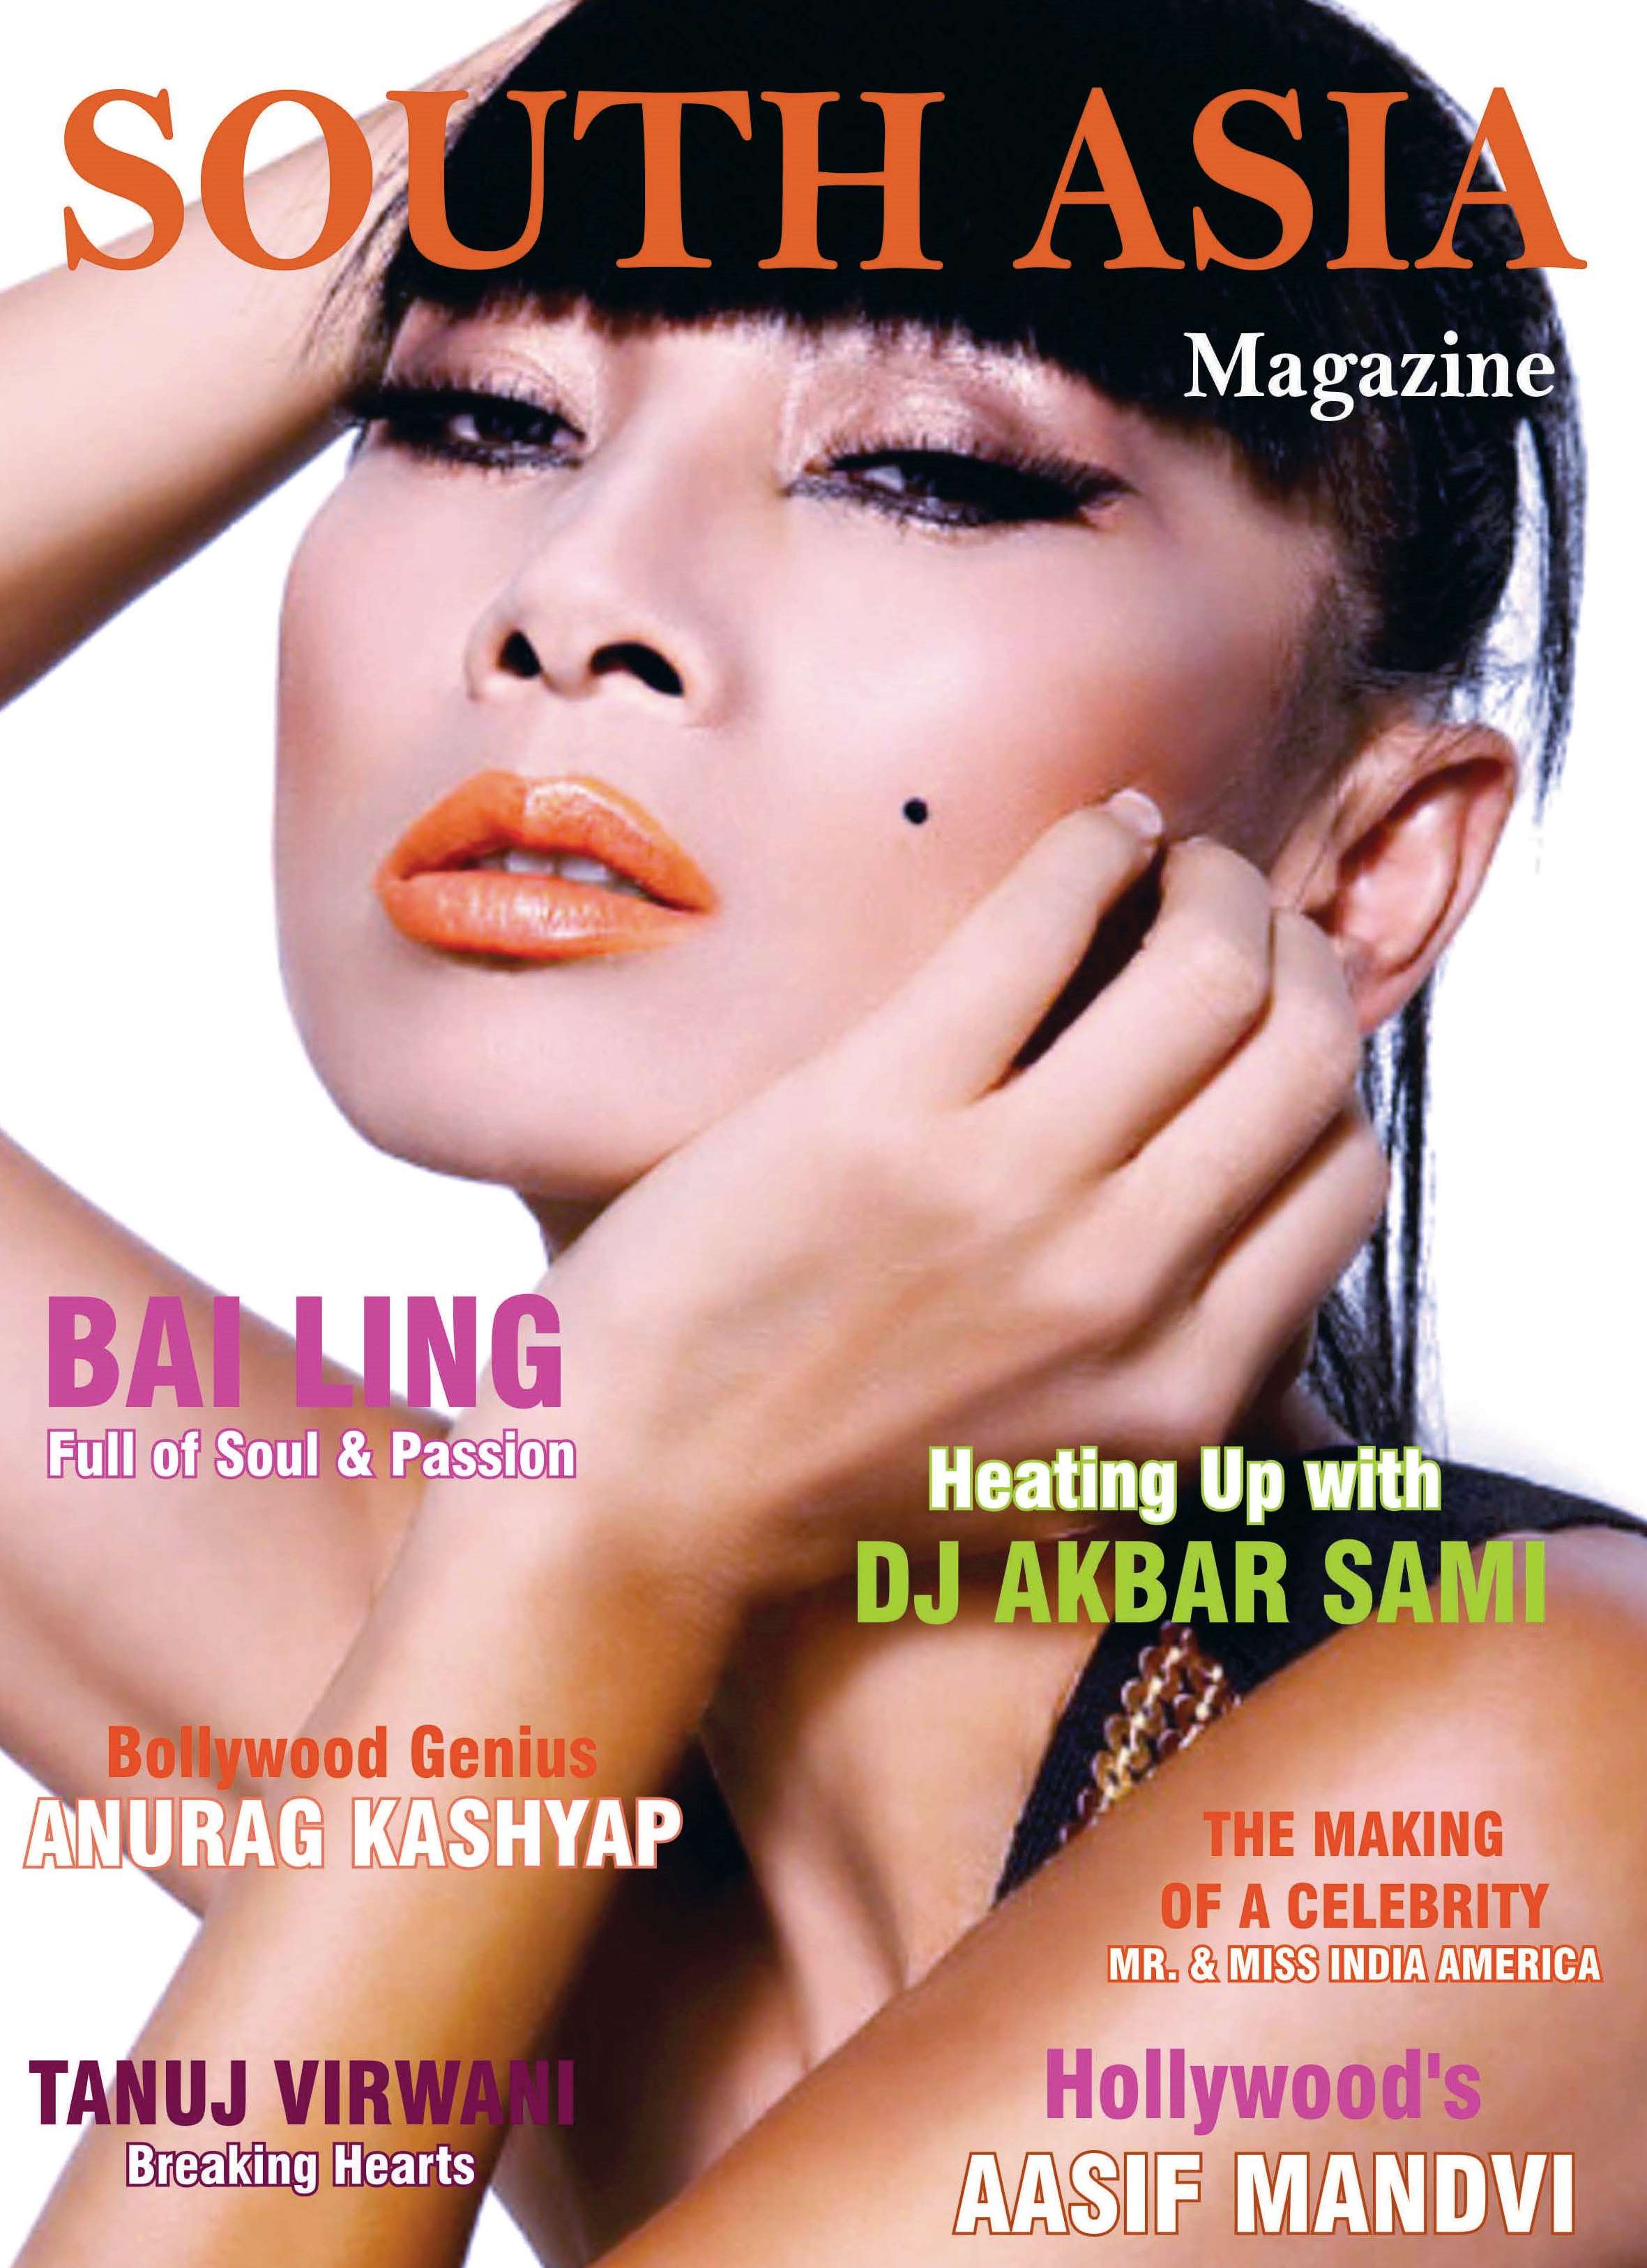 actress Bai Ling - South Asia Magazine cover girl